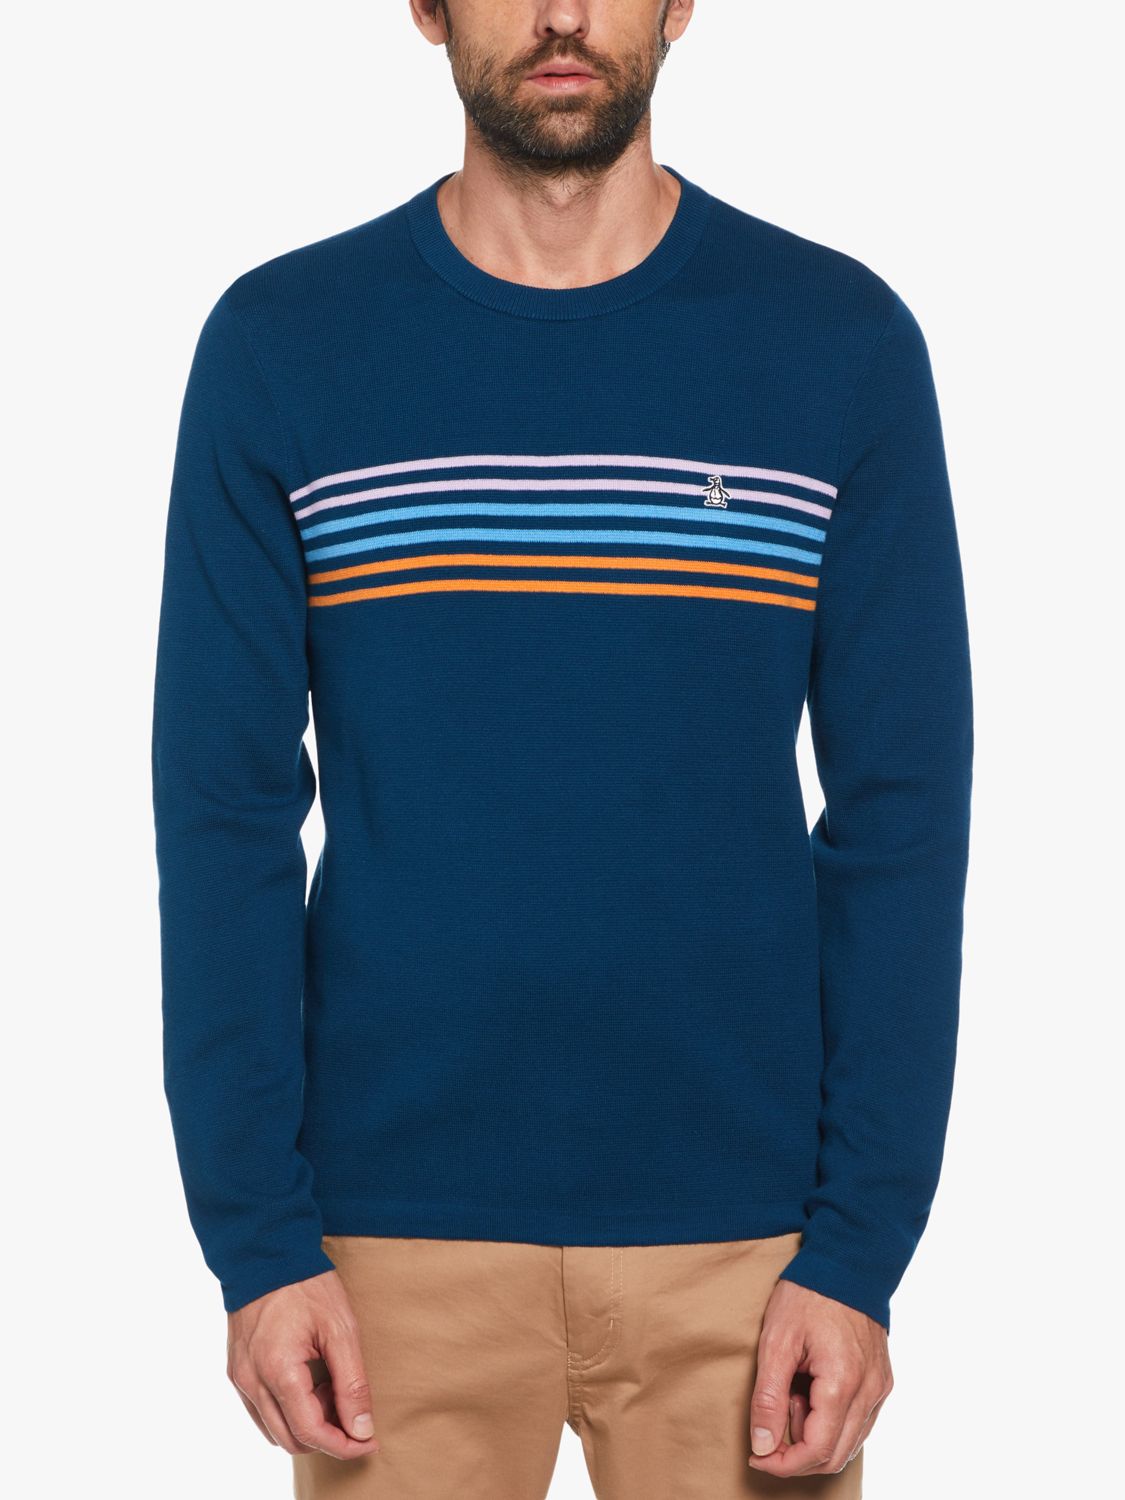 Original Penguin Chest Stripe Sweater, Poseidon Blue, L